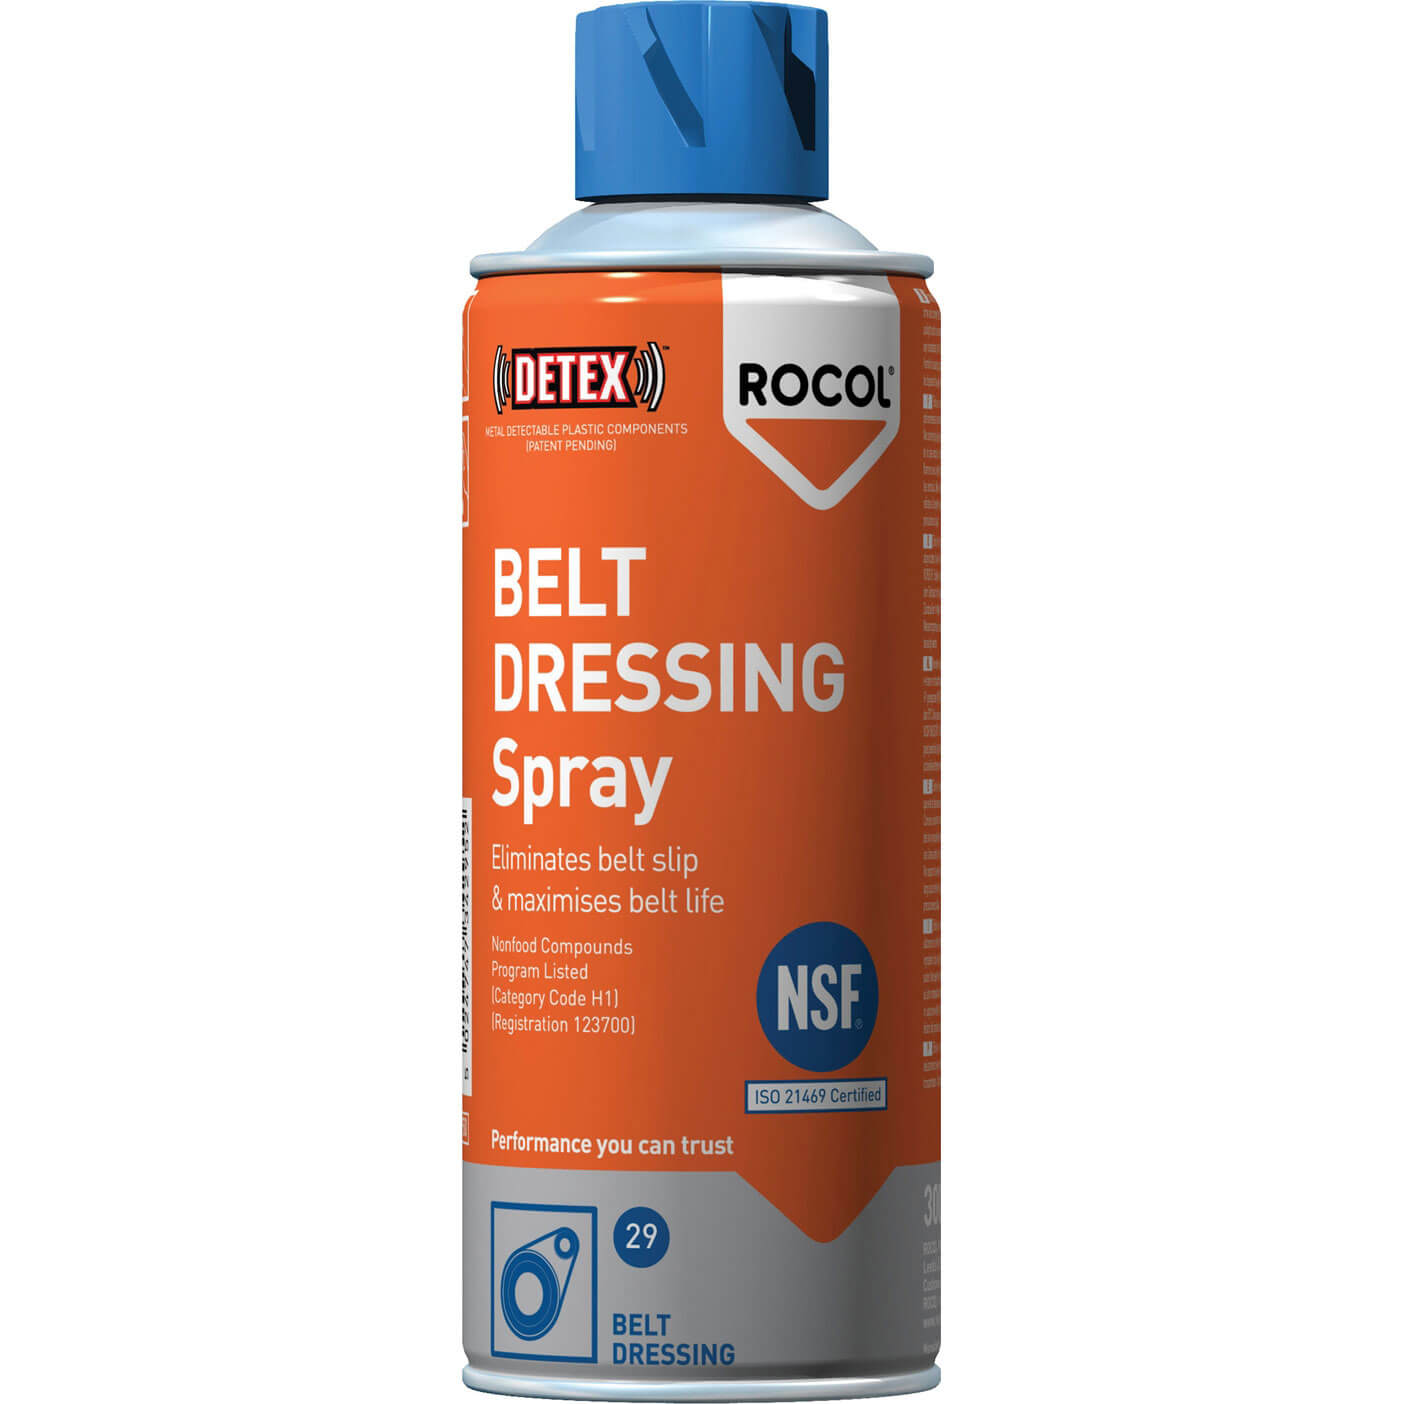 Rocol Belt Dressing Spray 300ml